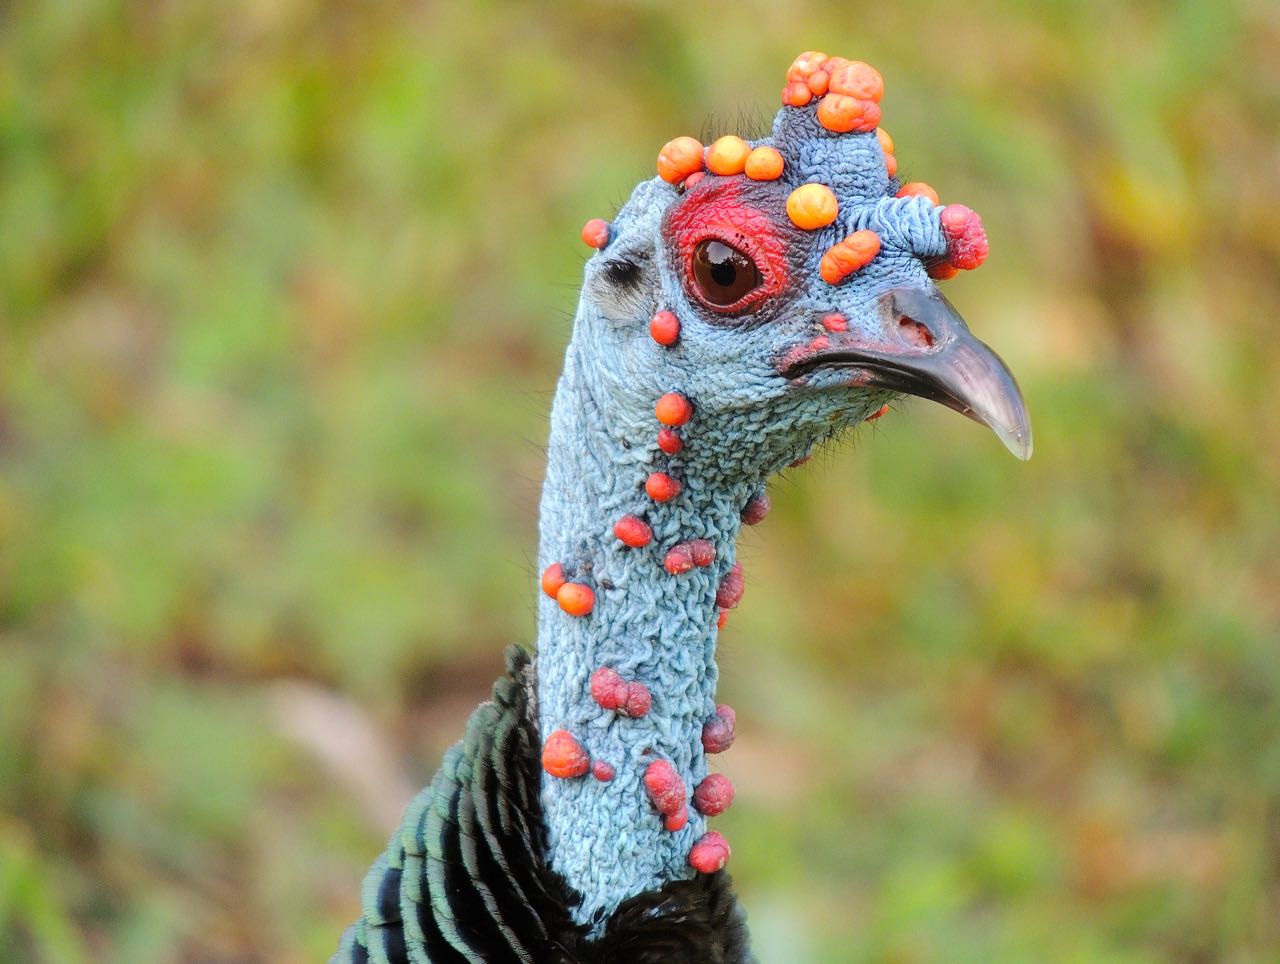 Ocellated Turkey